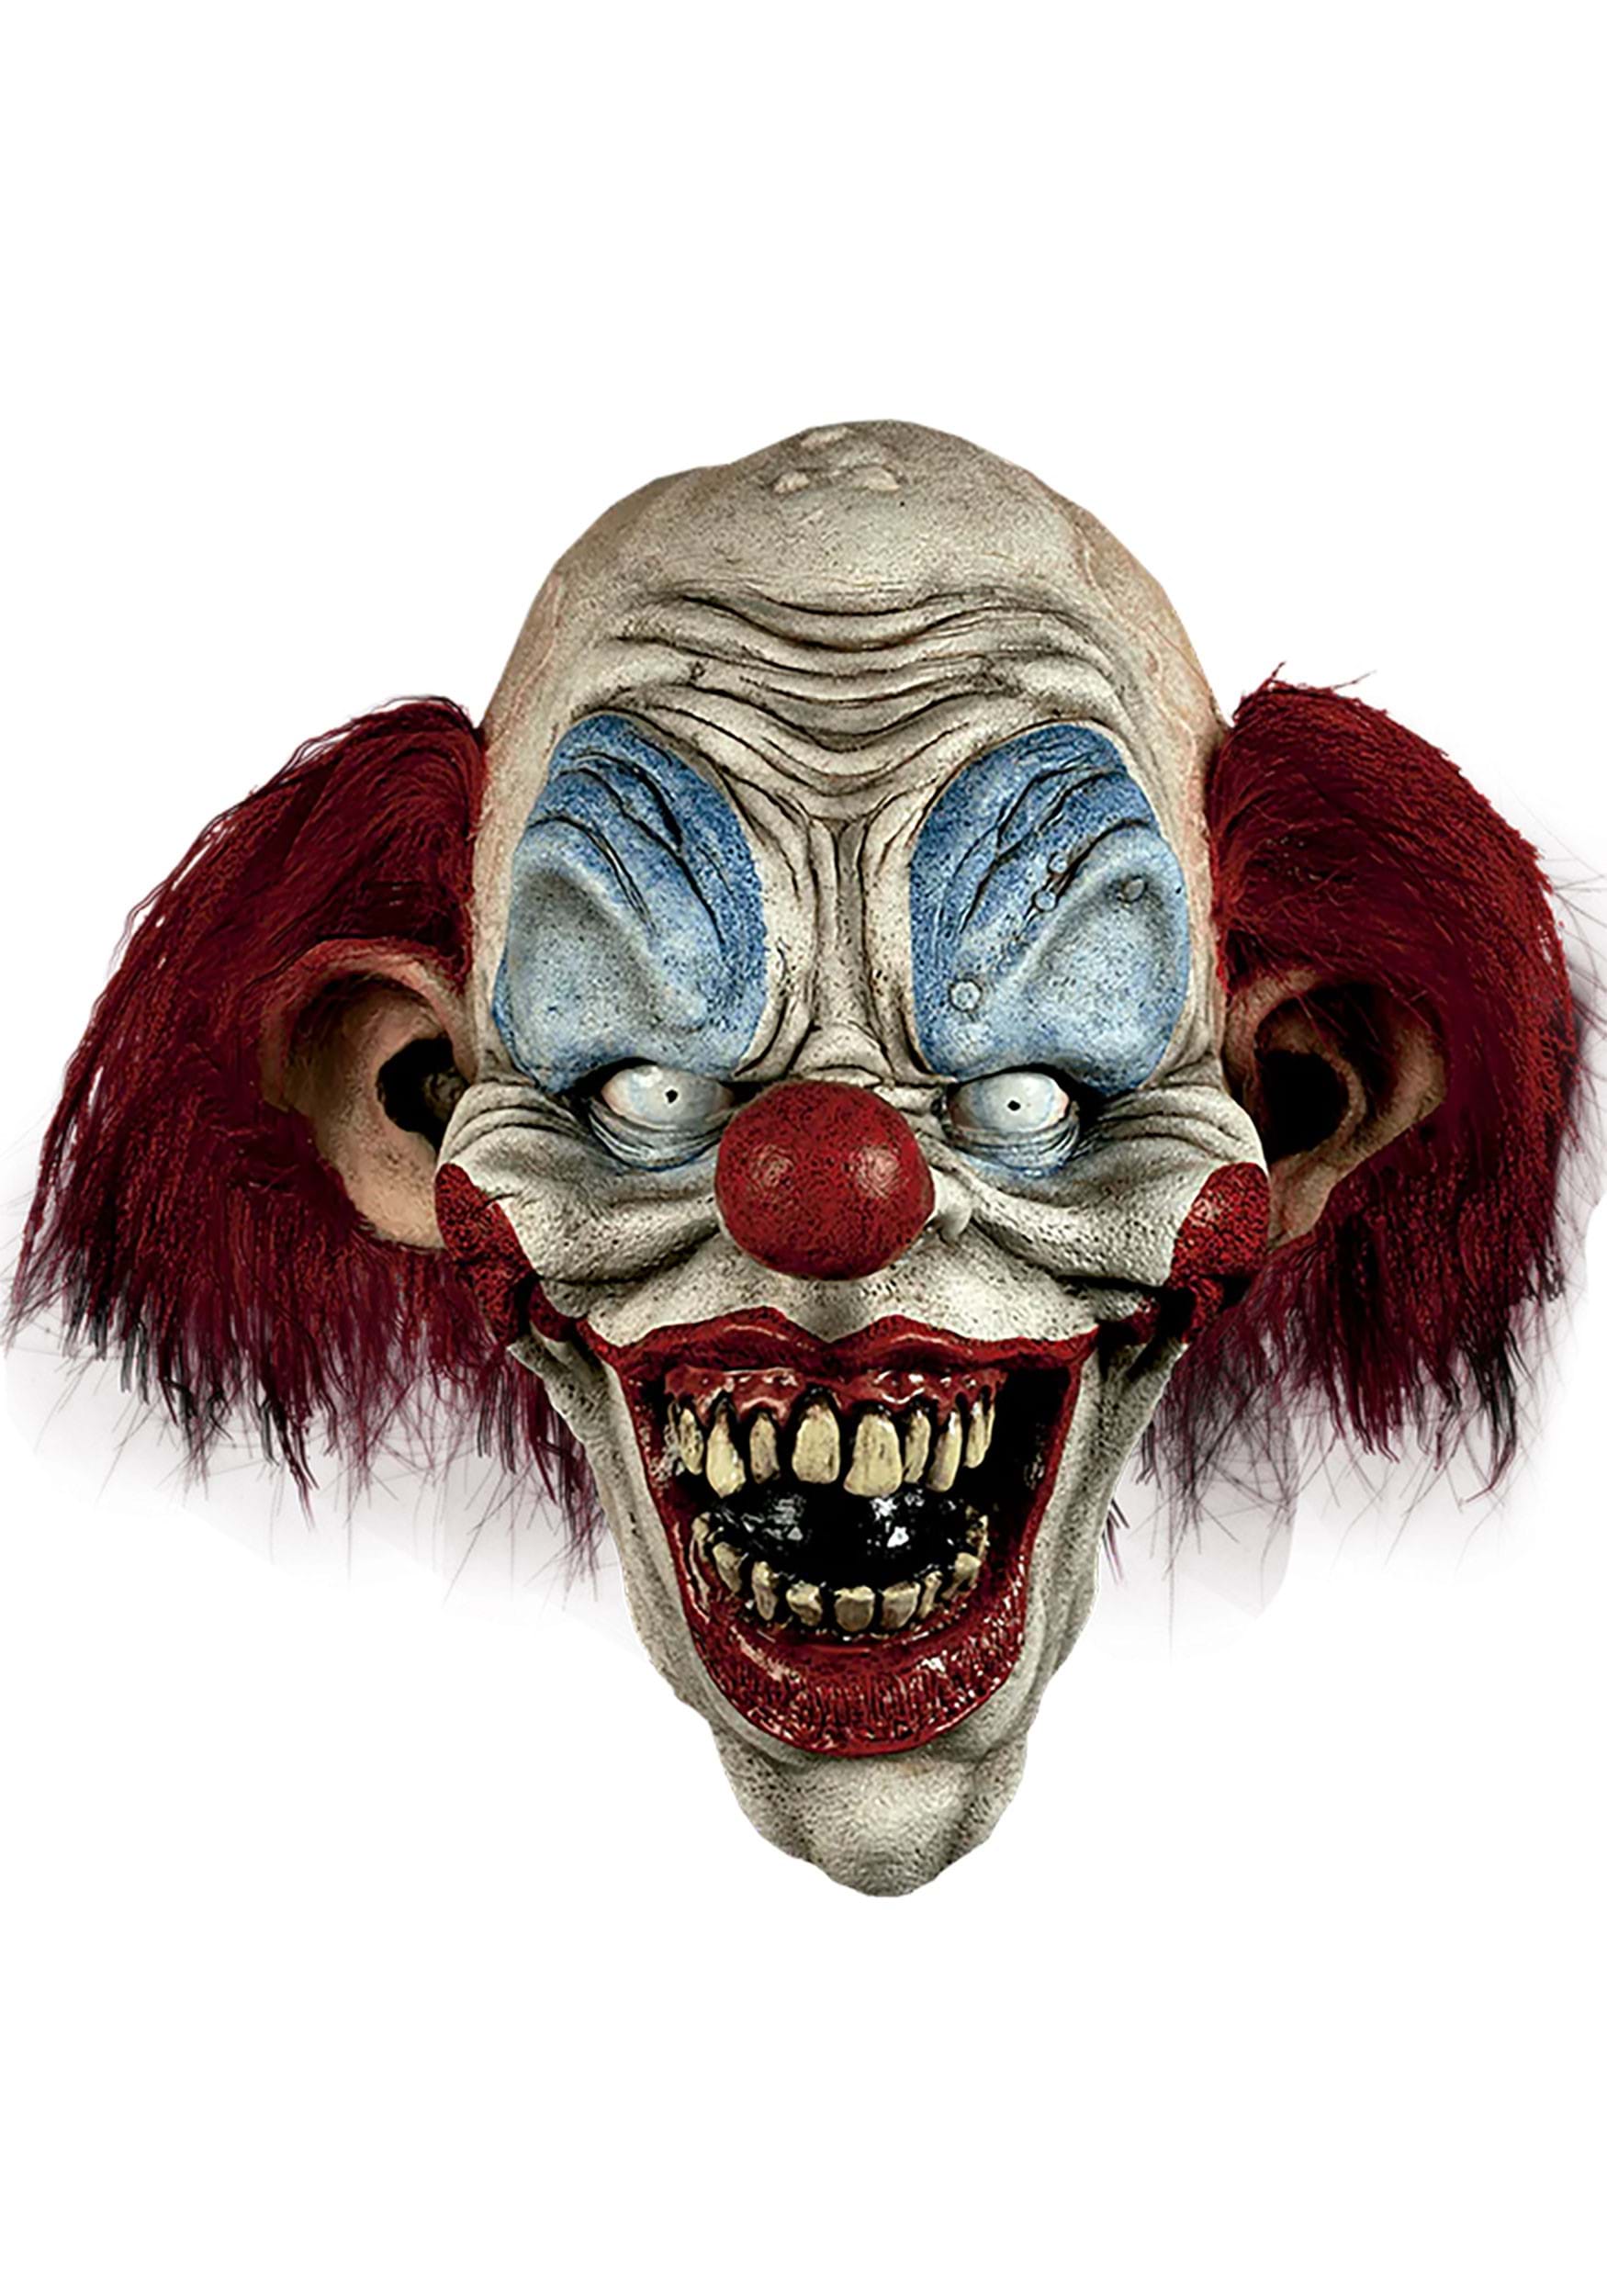 Image of Soho the Clown Adult Mask ID OK3418-ST